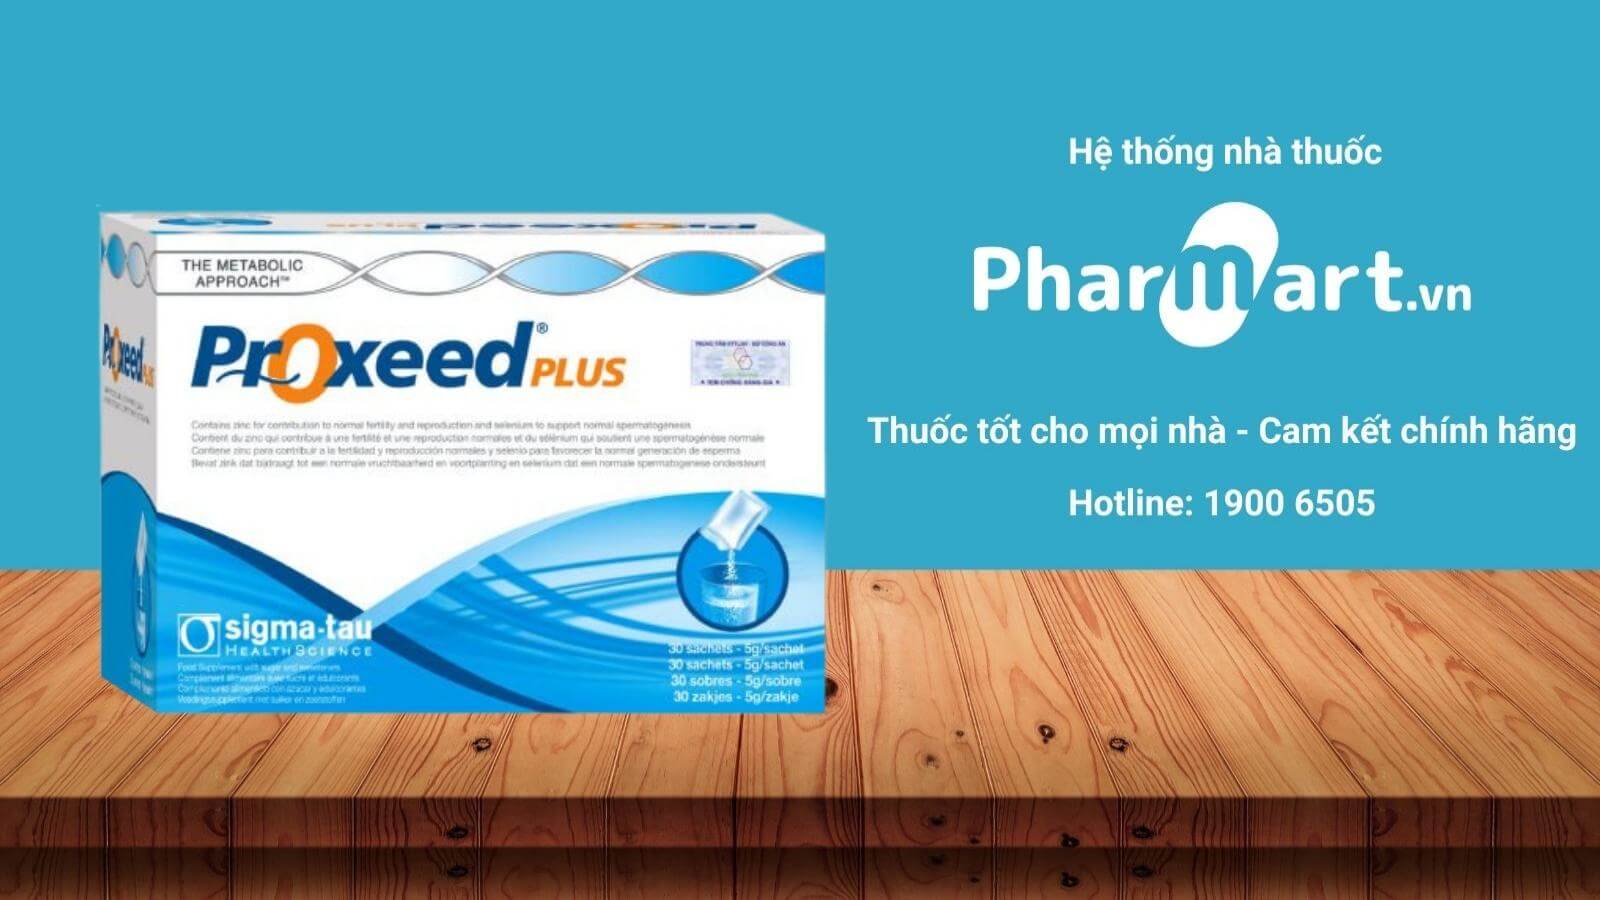 Mua sản phẩm Proxeed Plus tại Pharmart.vn